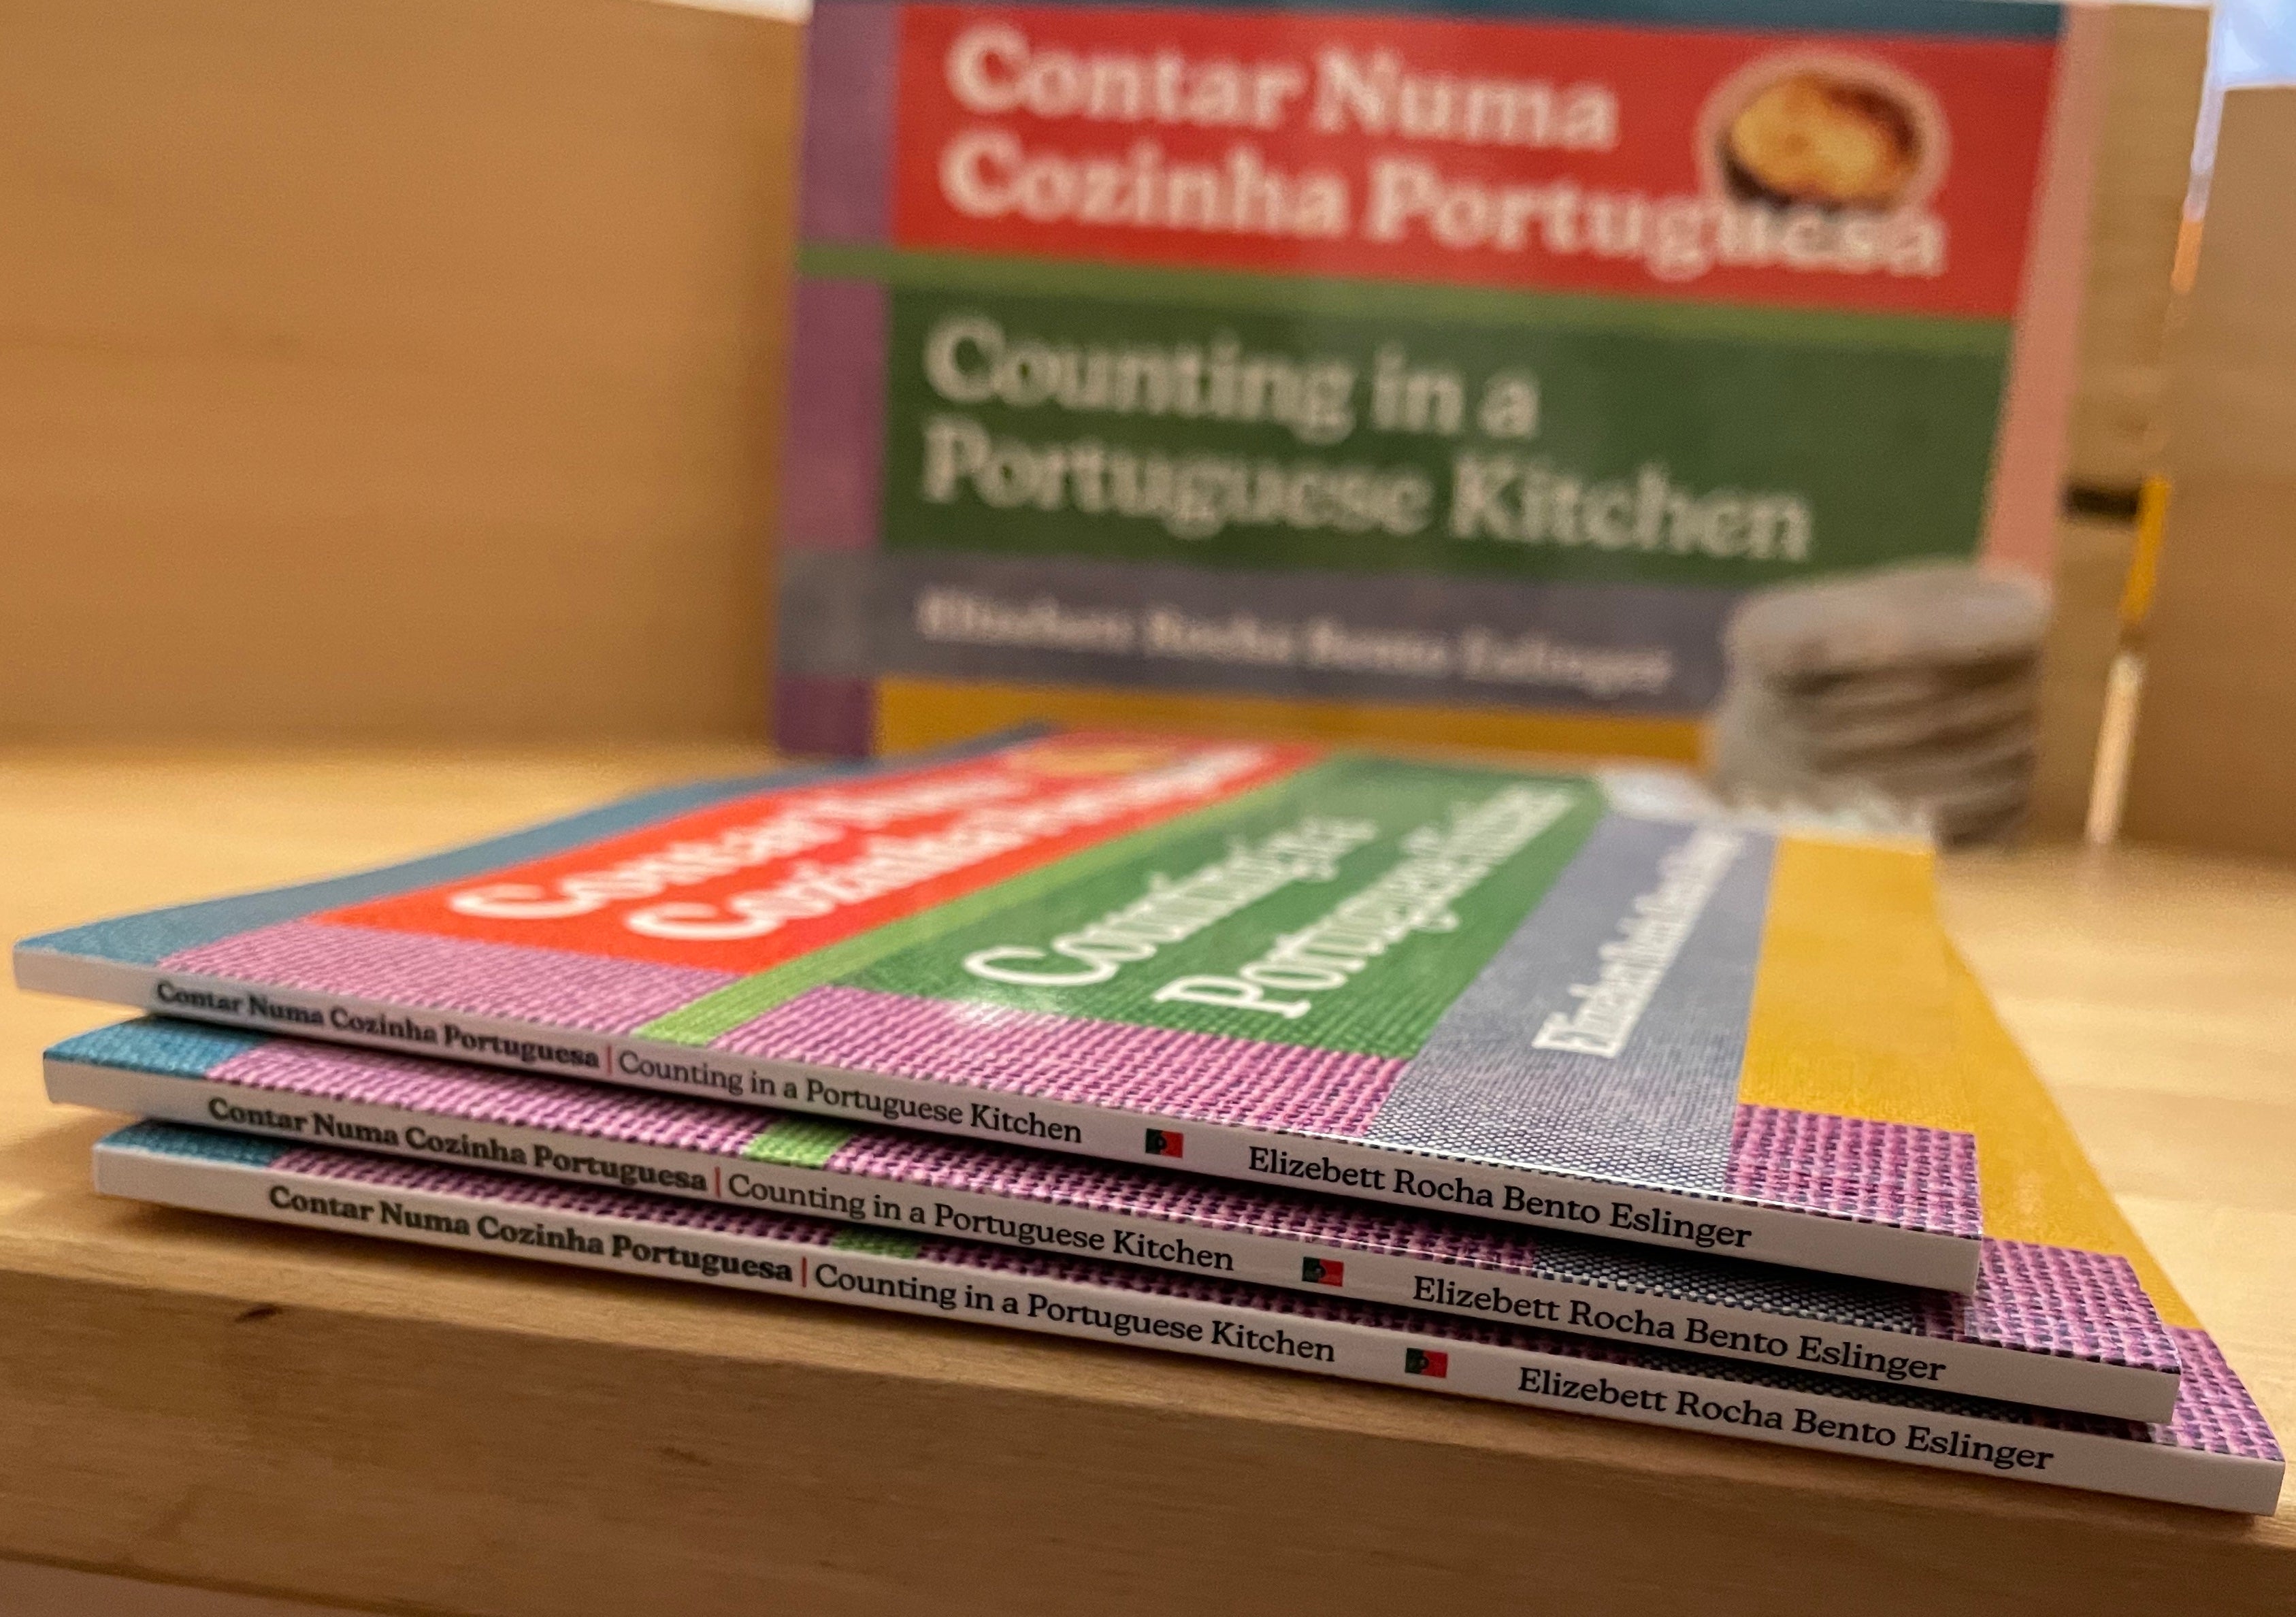 Contar Numa Cozinha Portuguesa | Counting in a Portuguese Kitchen Book